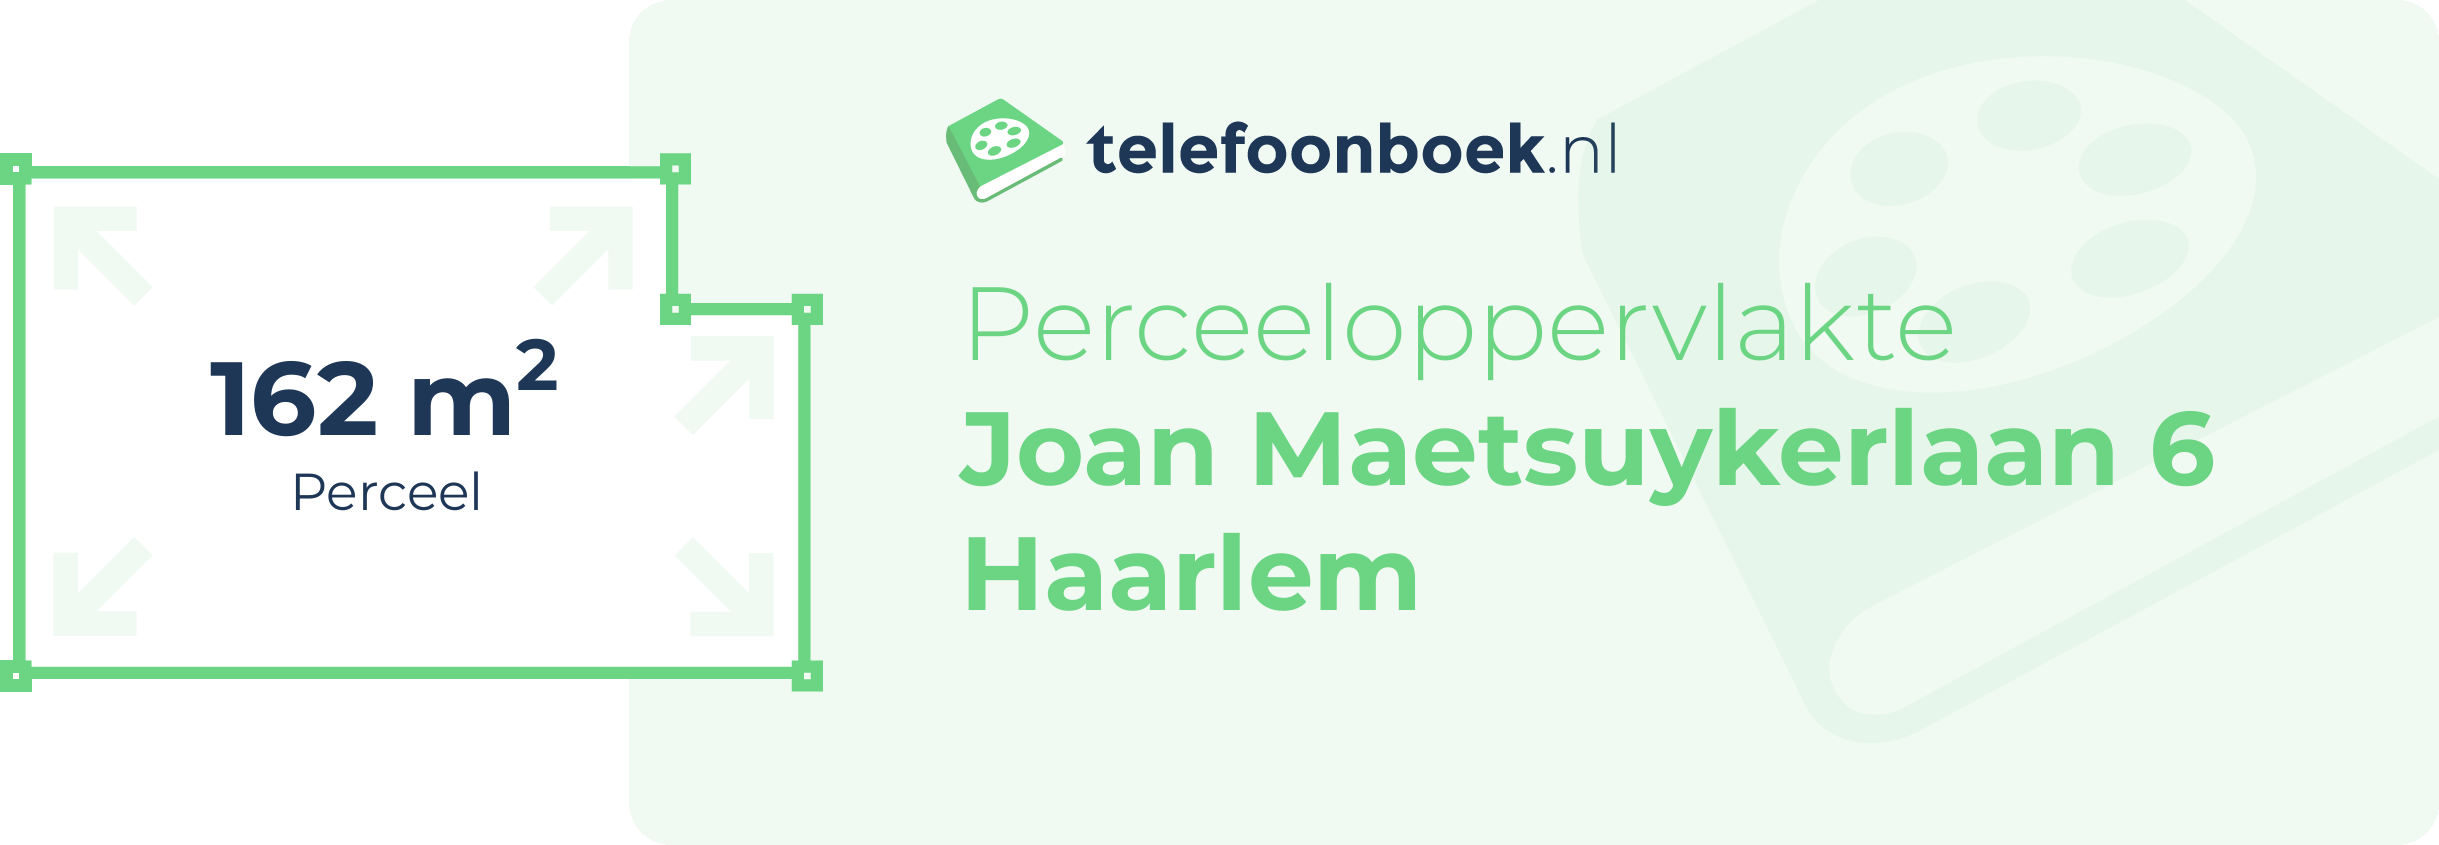 Perceeloppervlakte Joan Maetsuykerlaan 6 Haarlem